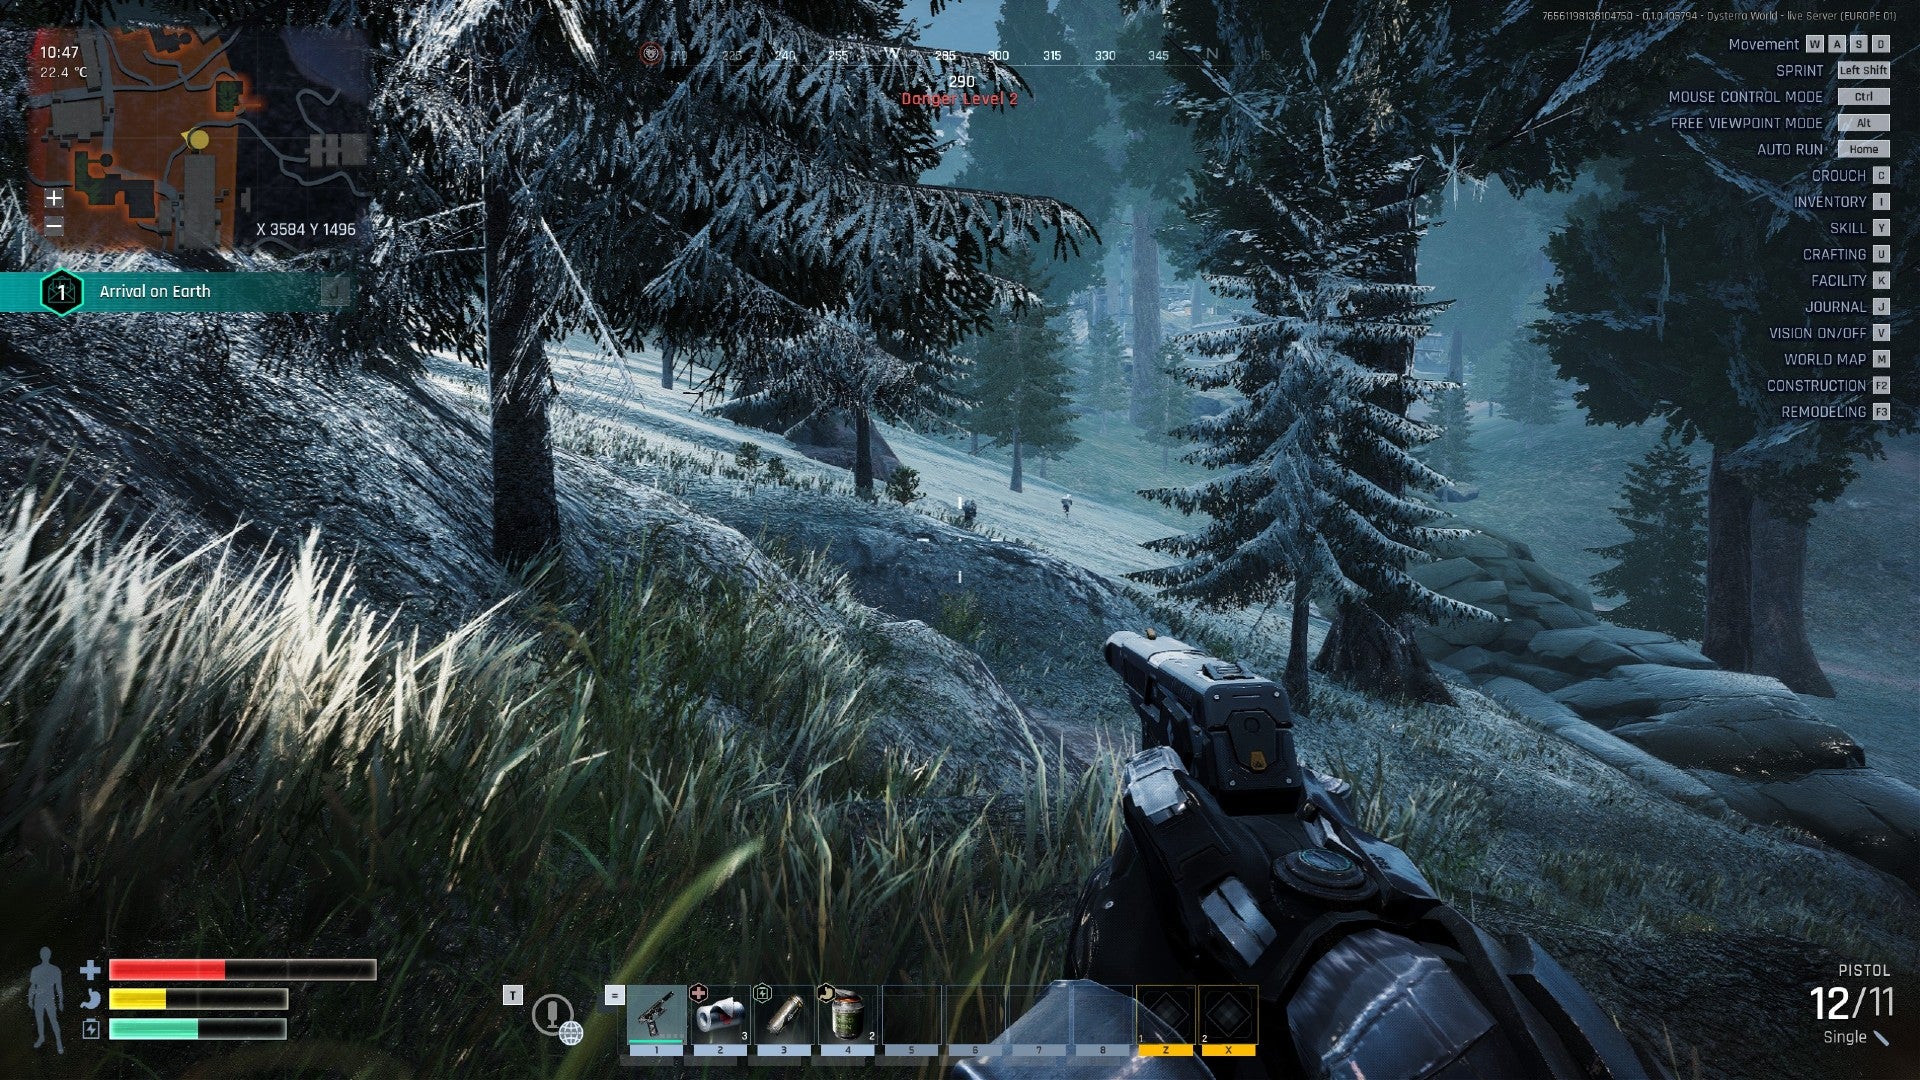 Tangkapan layar Dysterra di mana saya mengarahkan pistol ke beberapa pemain di sisi lain hutan bayangan